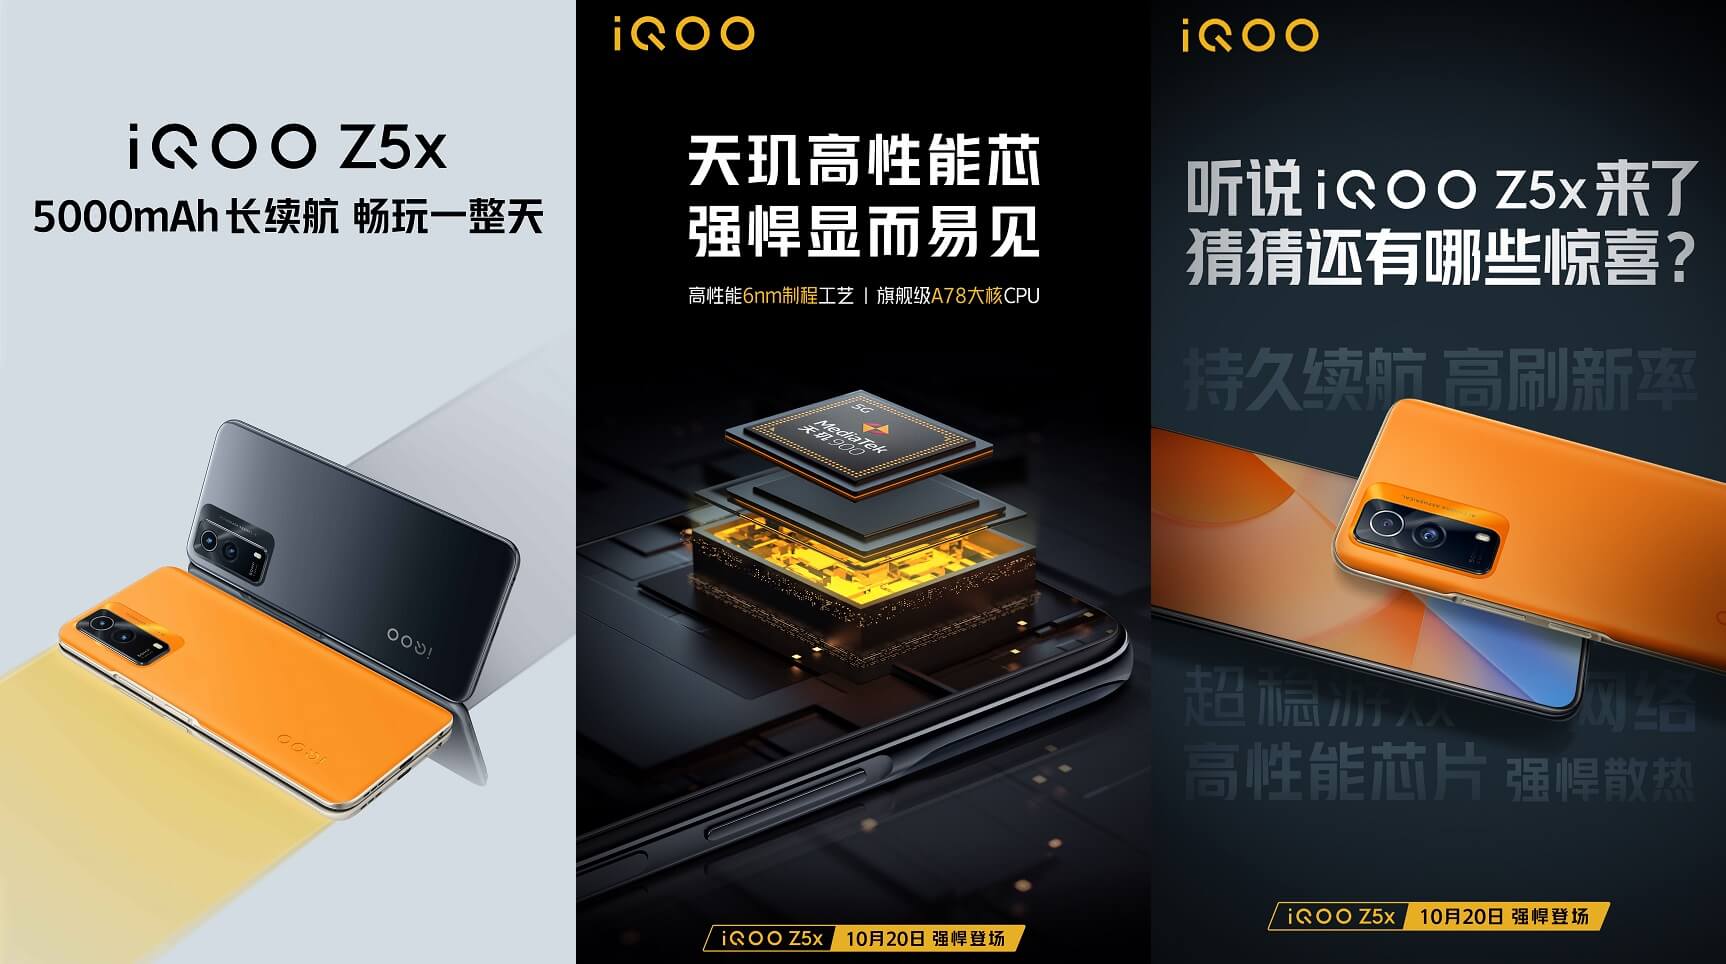 iQOO Z5X features